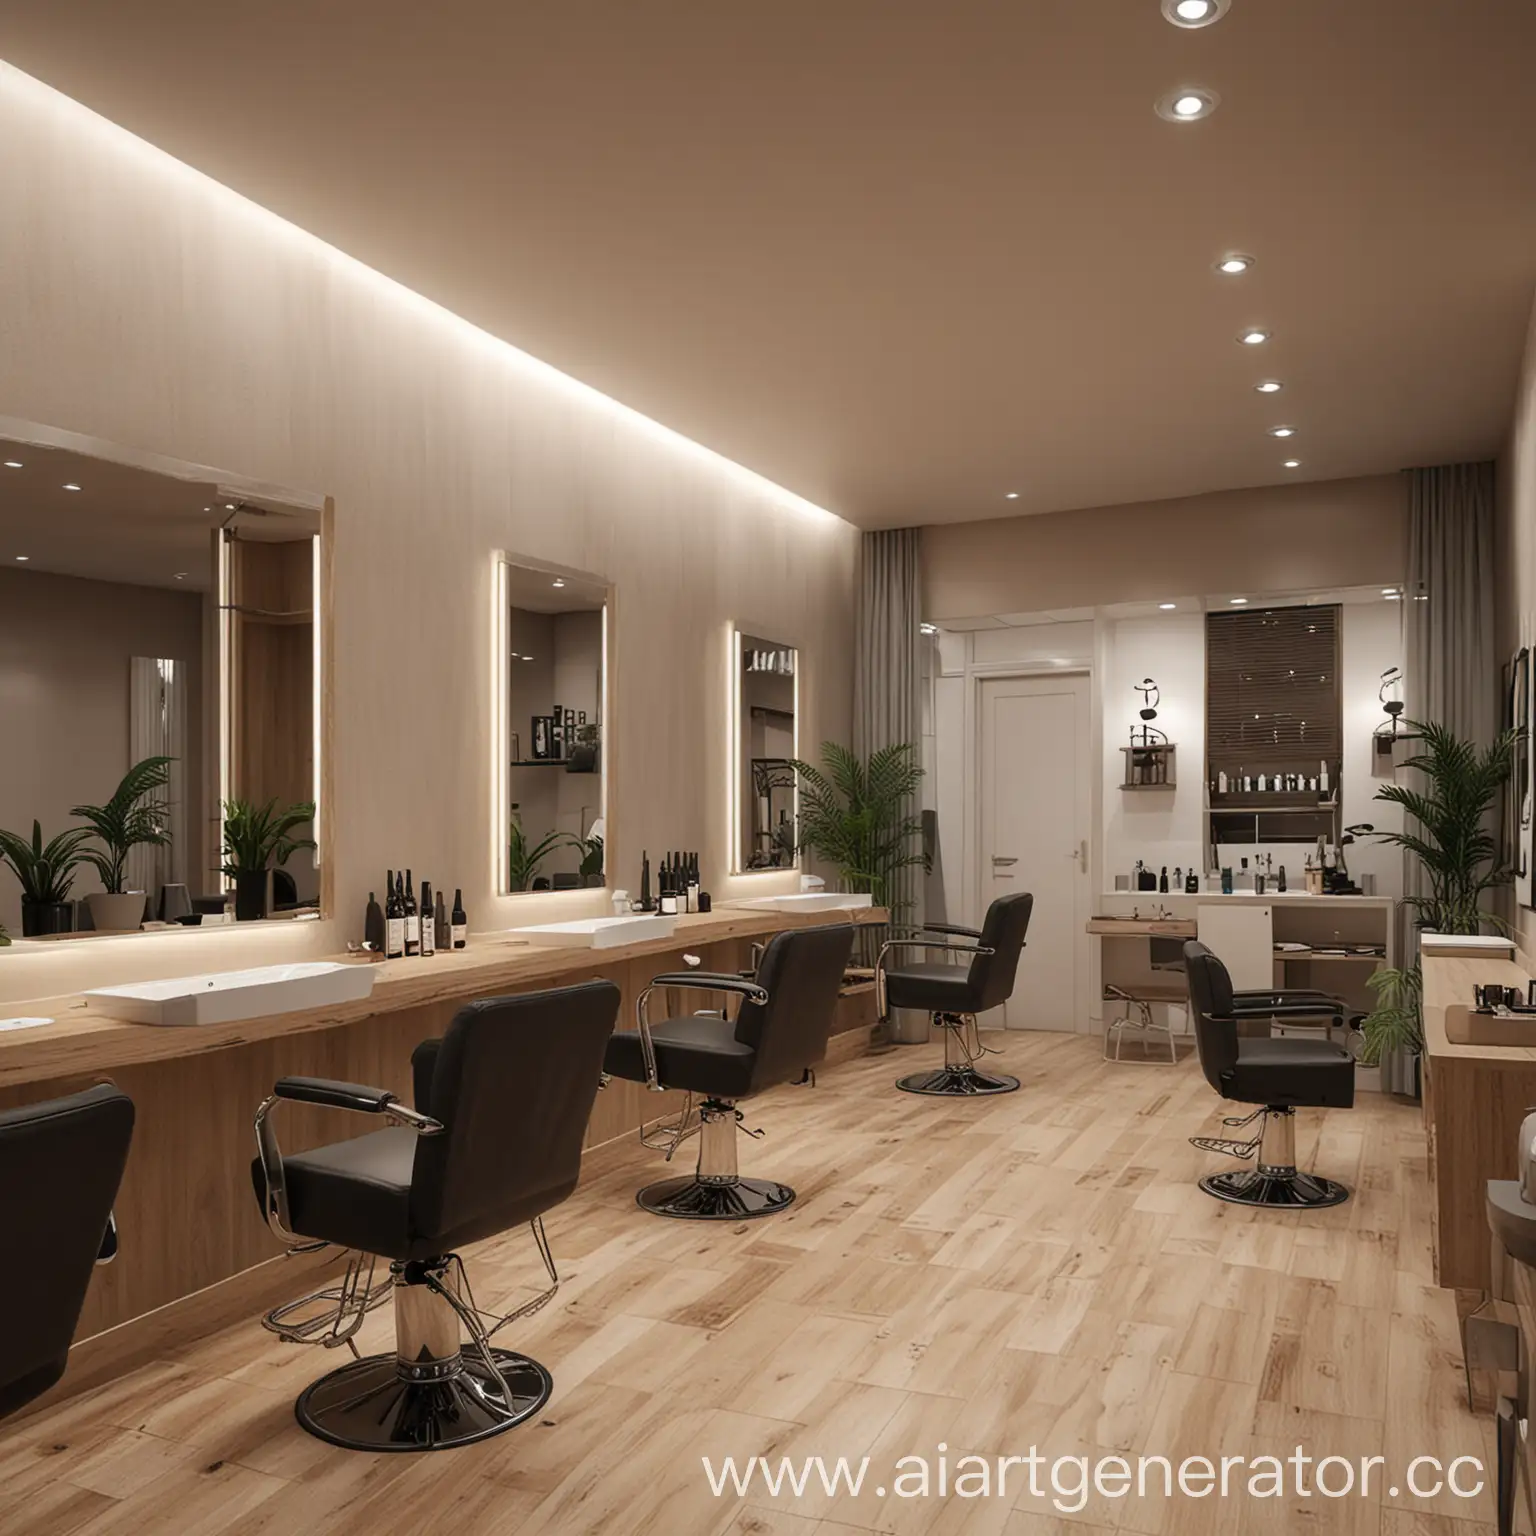 Create an interior render of a modern hair salon